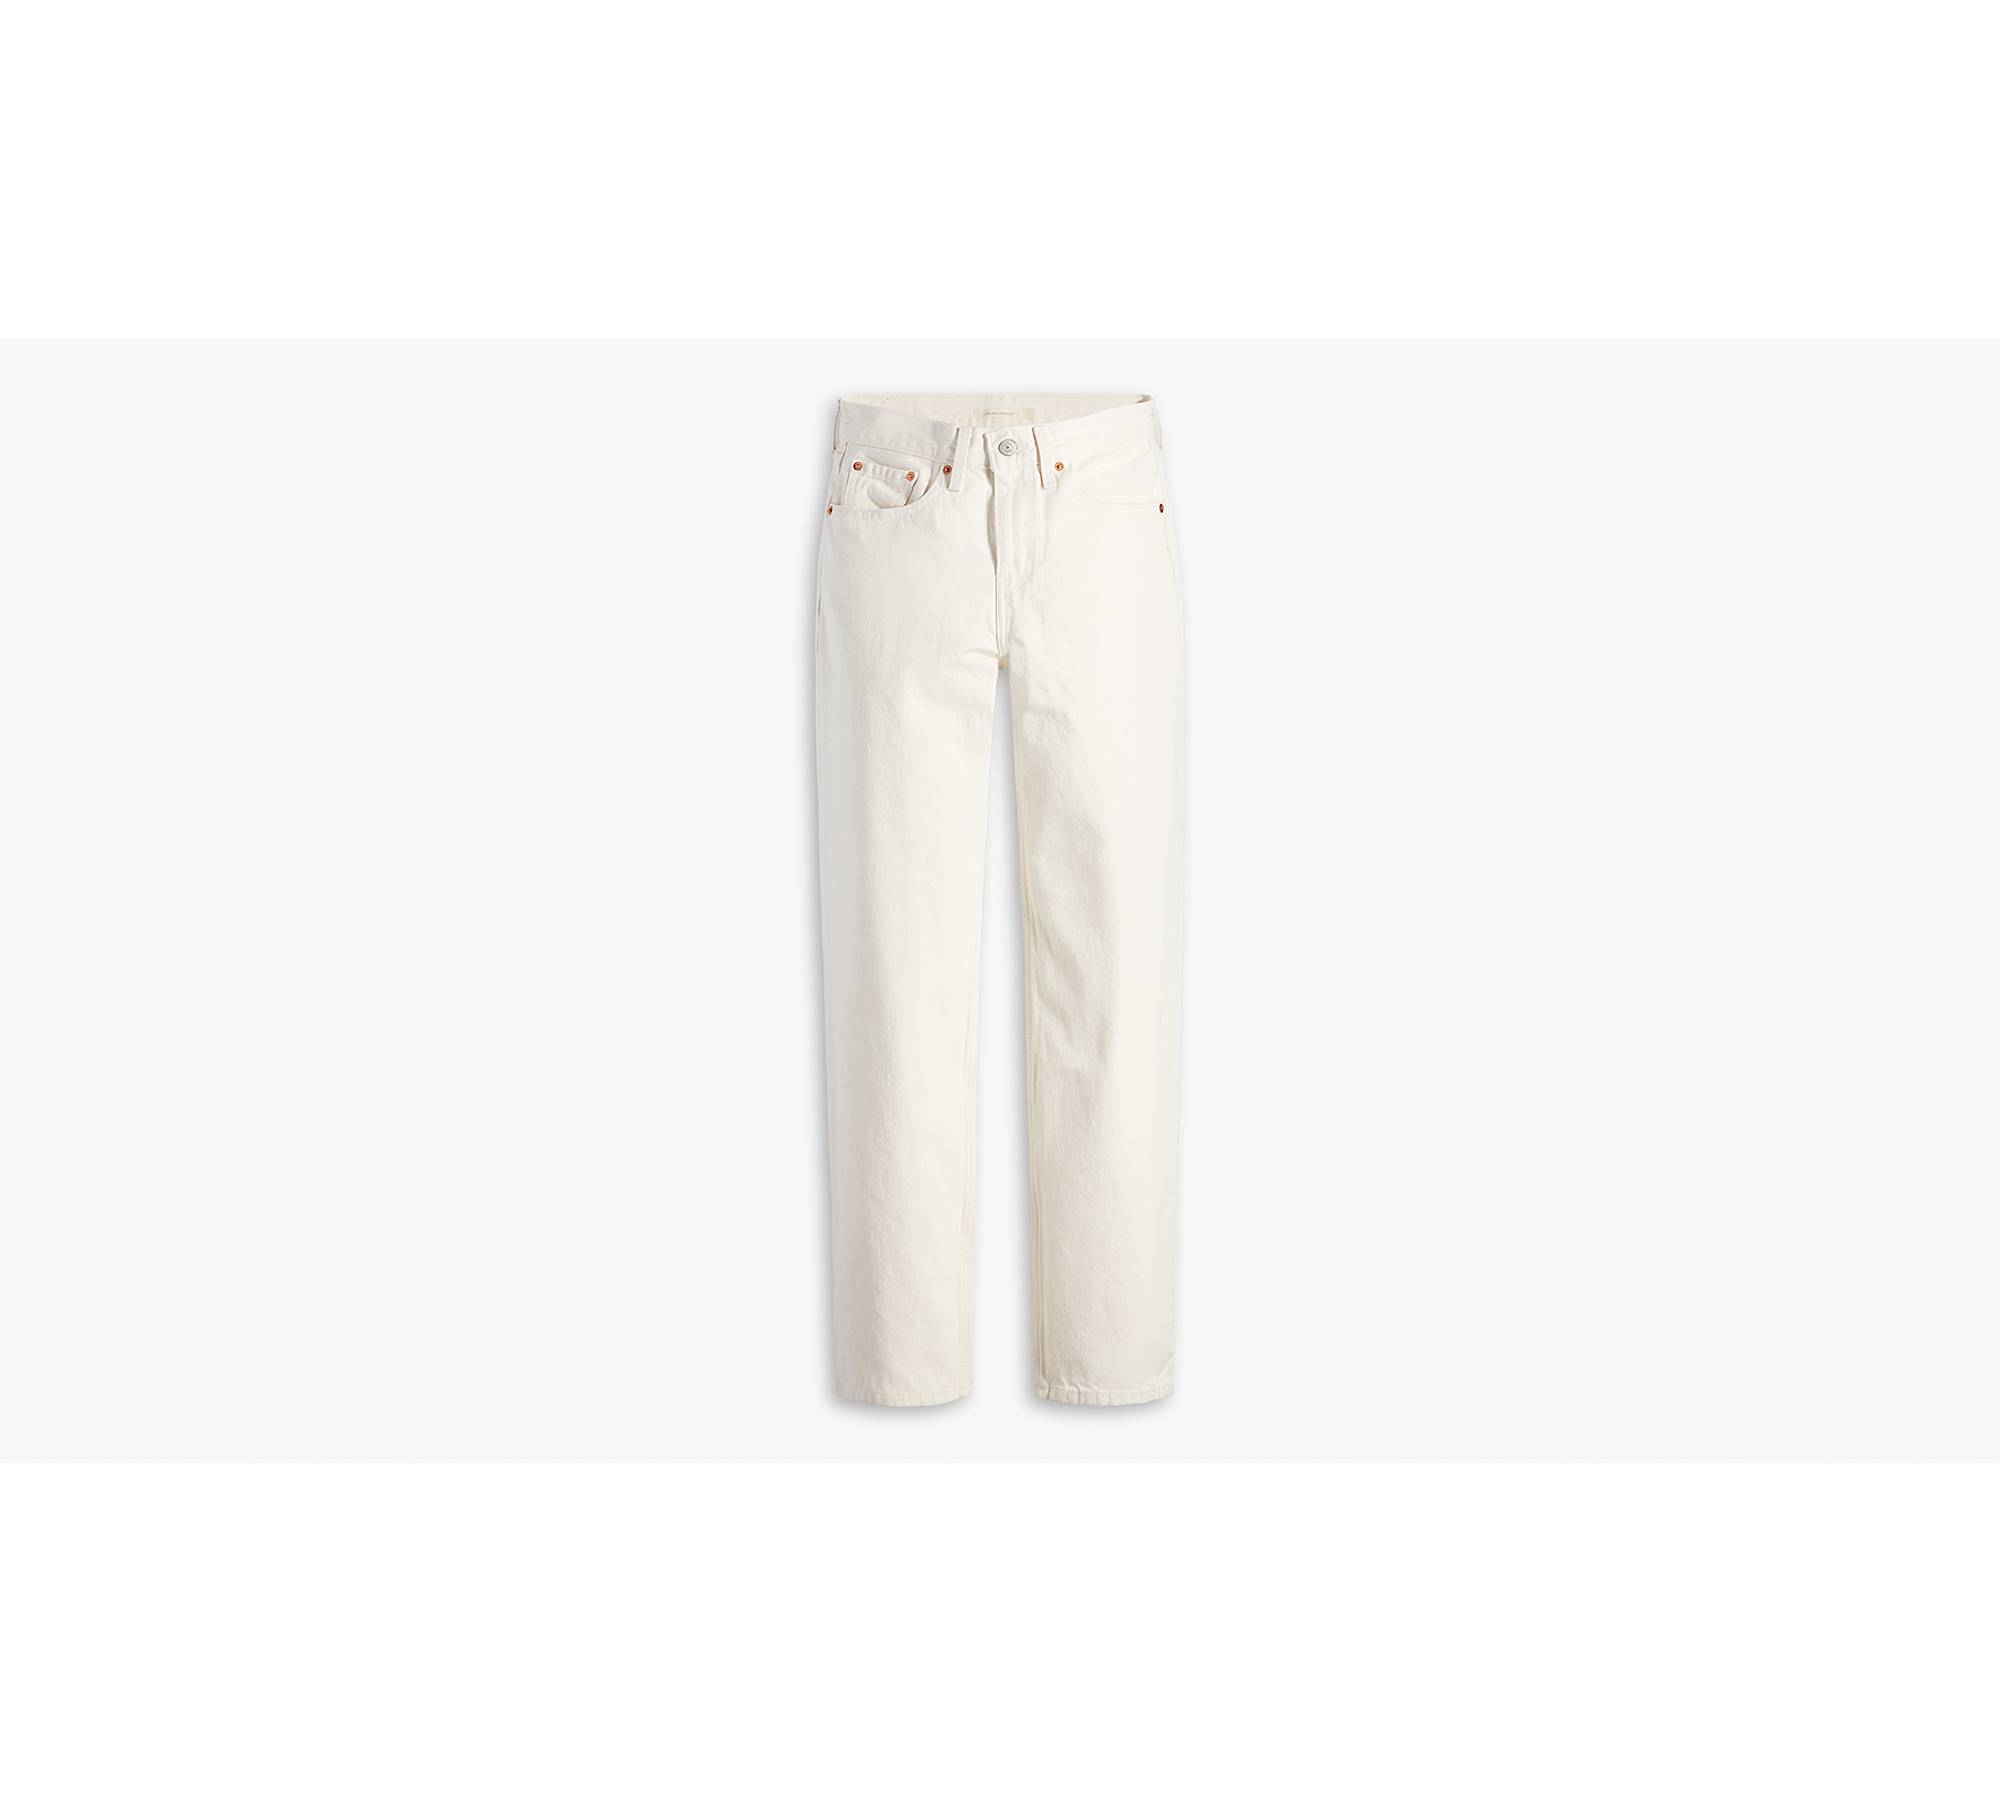 Low Pro Women's Jeans - White